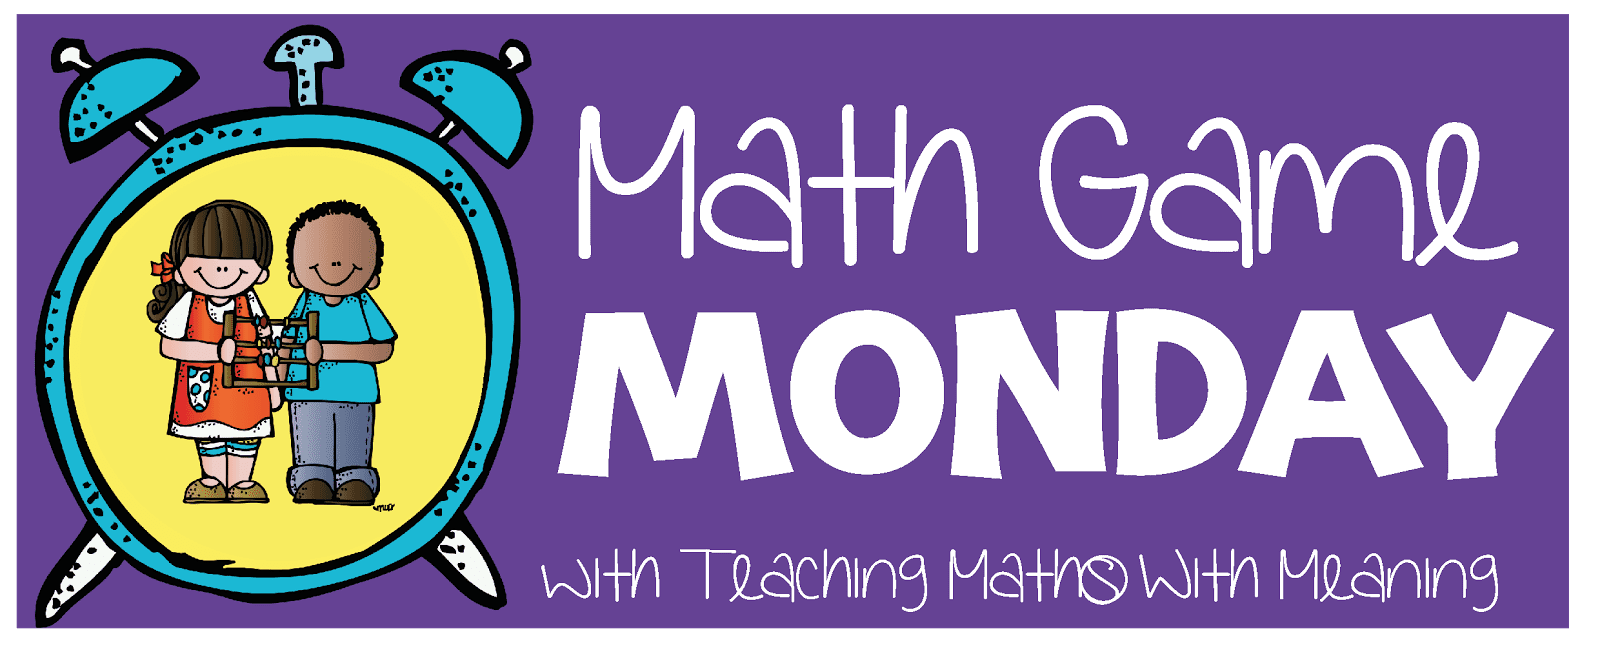 Math game monday mathful learners clipart logo